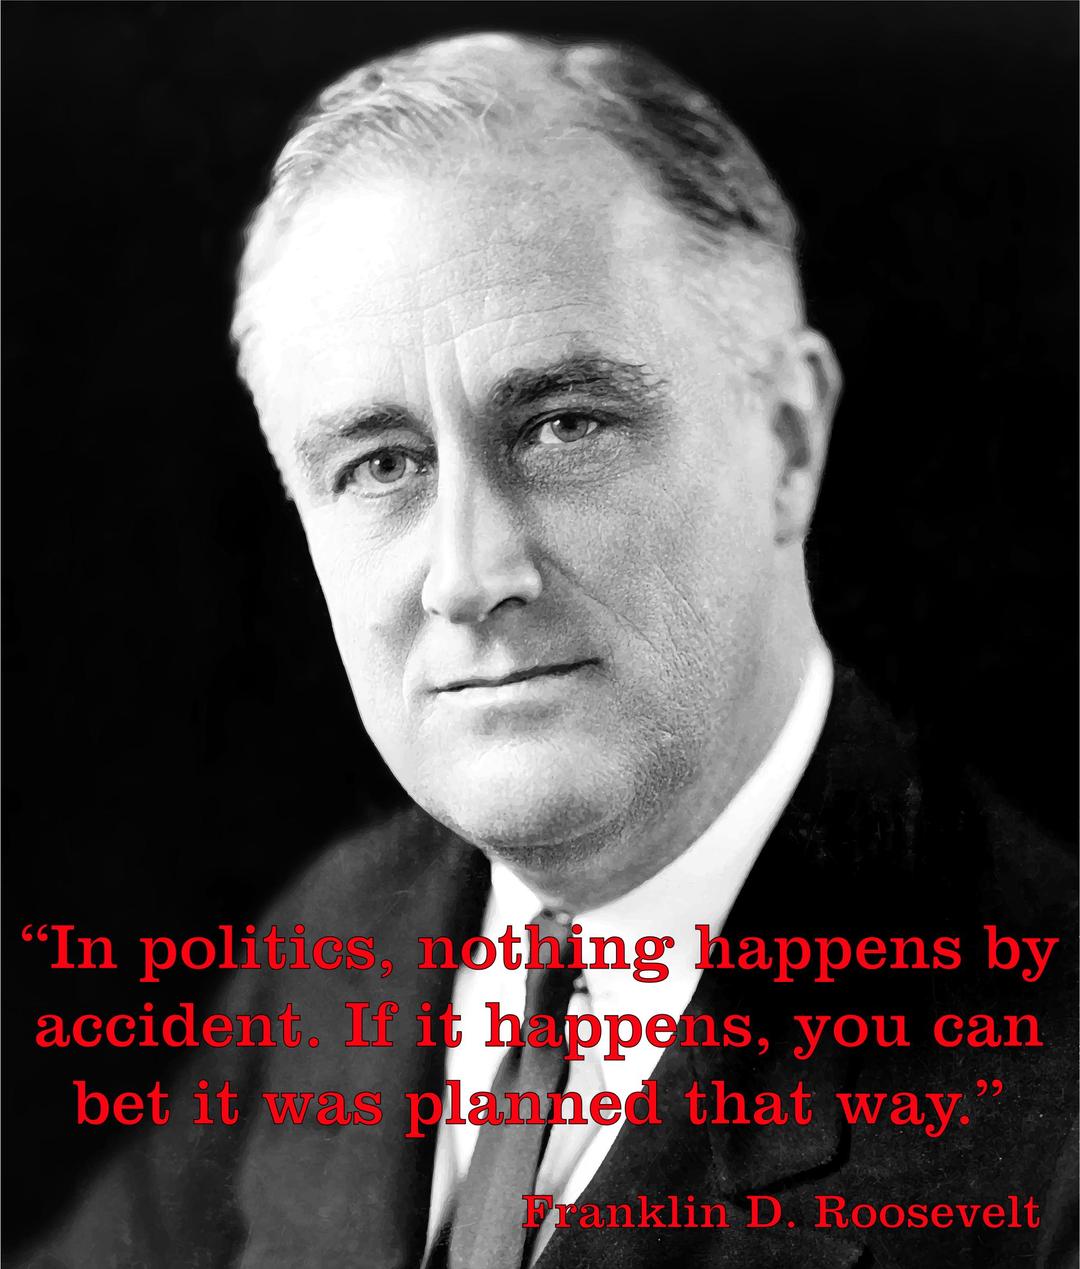 FDR (Franklin Delano Roosevelt) Portrait Quote png transparent